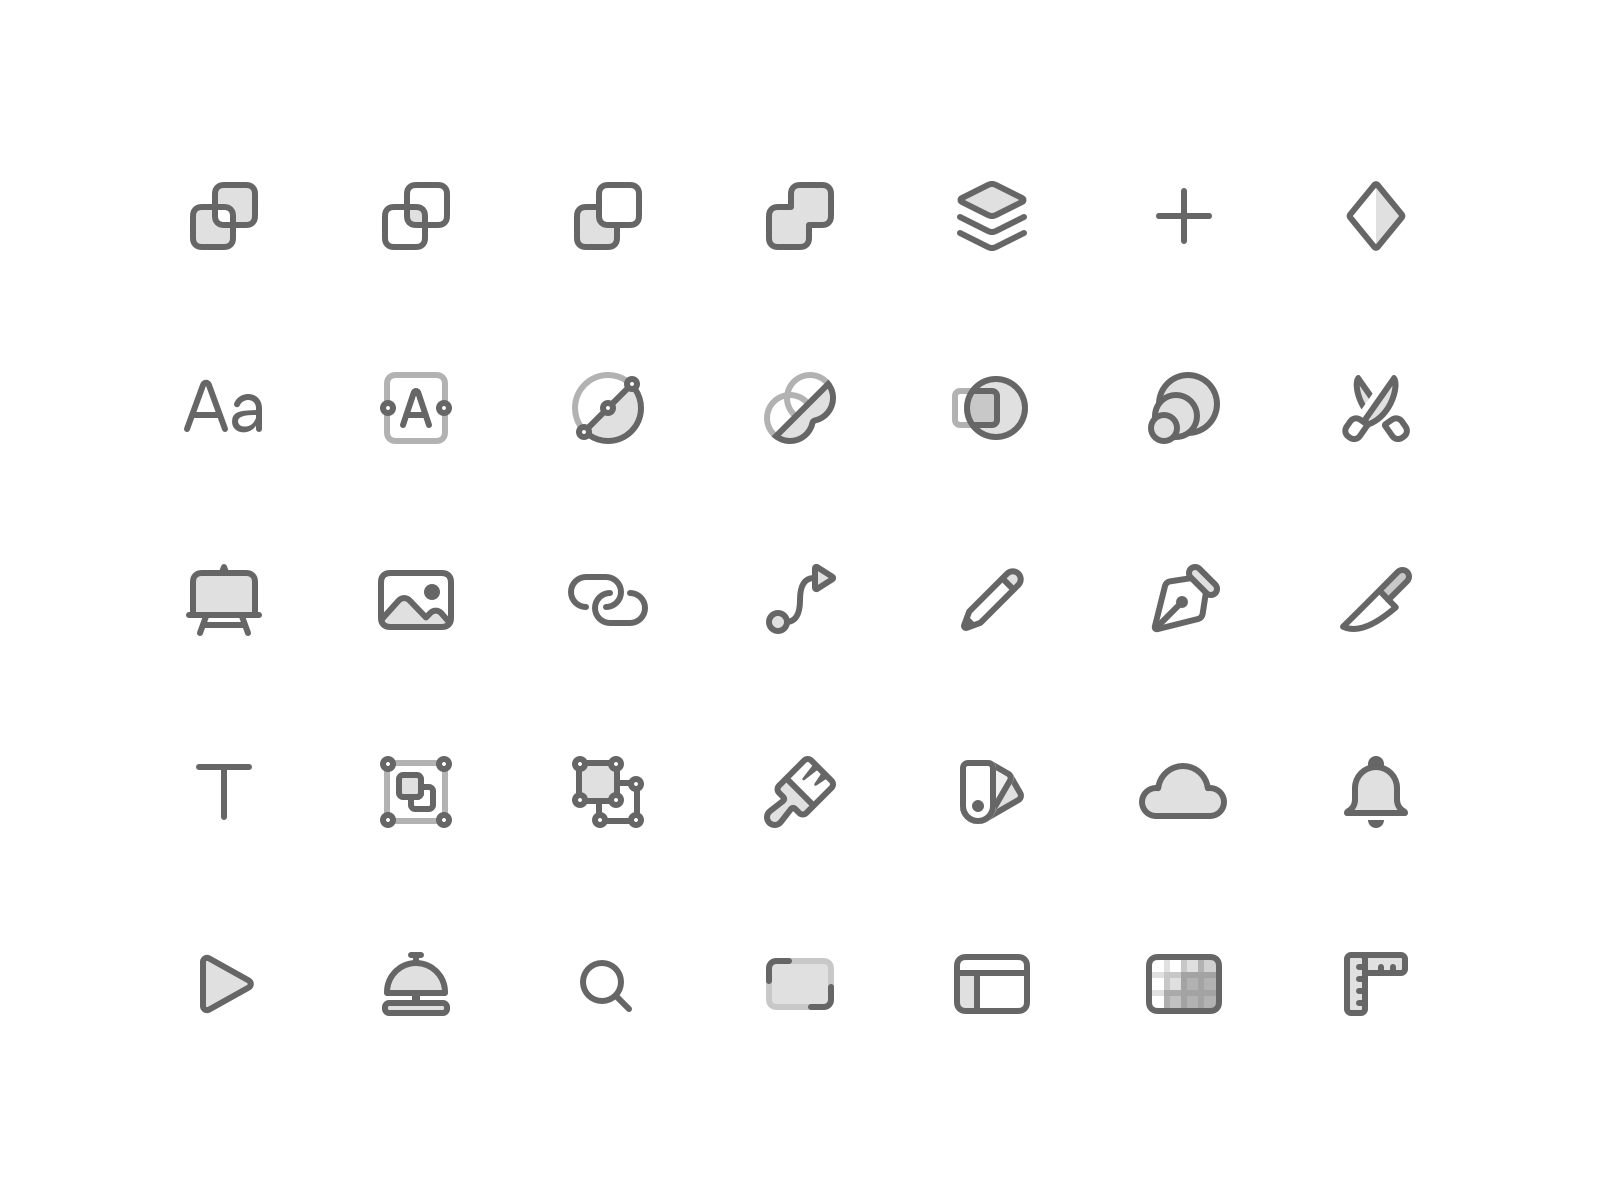 Sketch 70 — Toolbar Icons by Janik Baumgartner on Dribbble